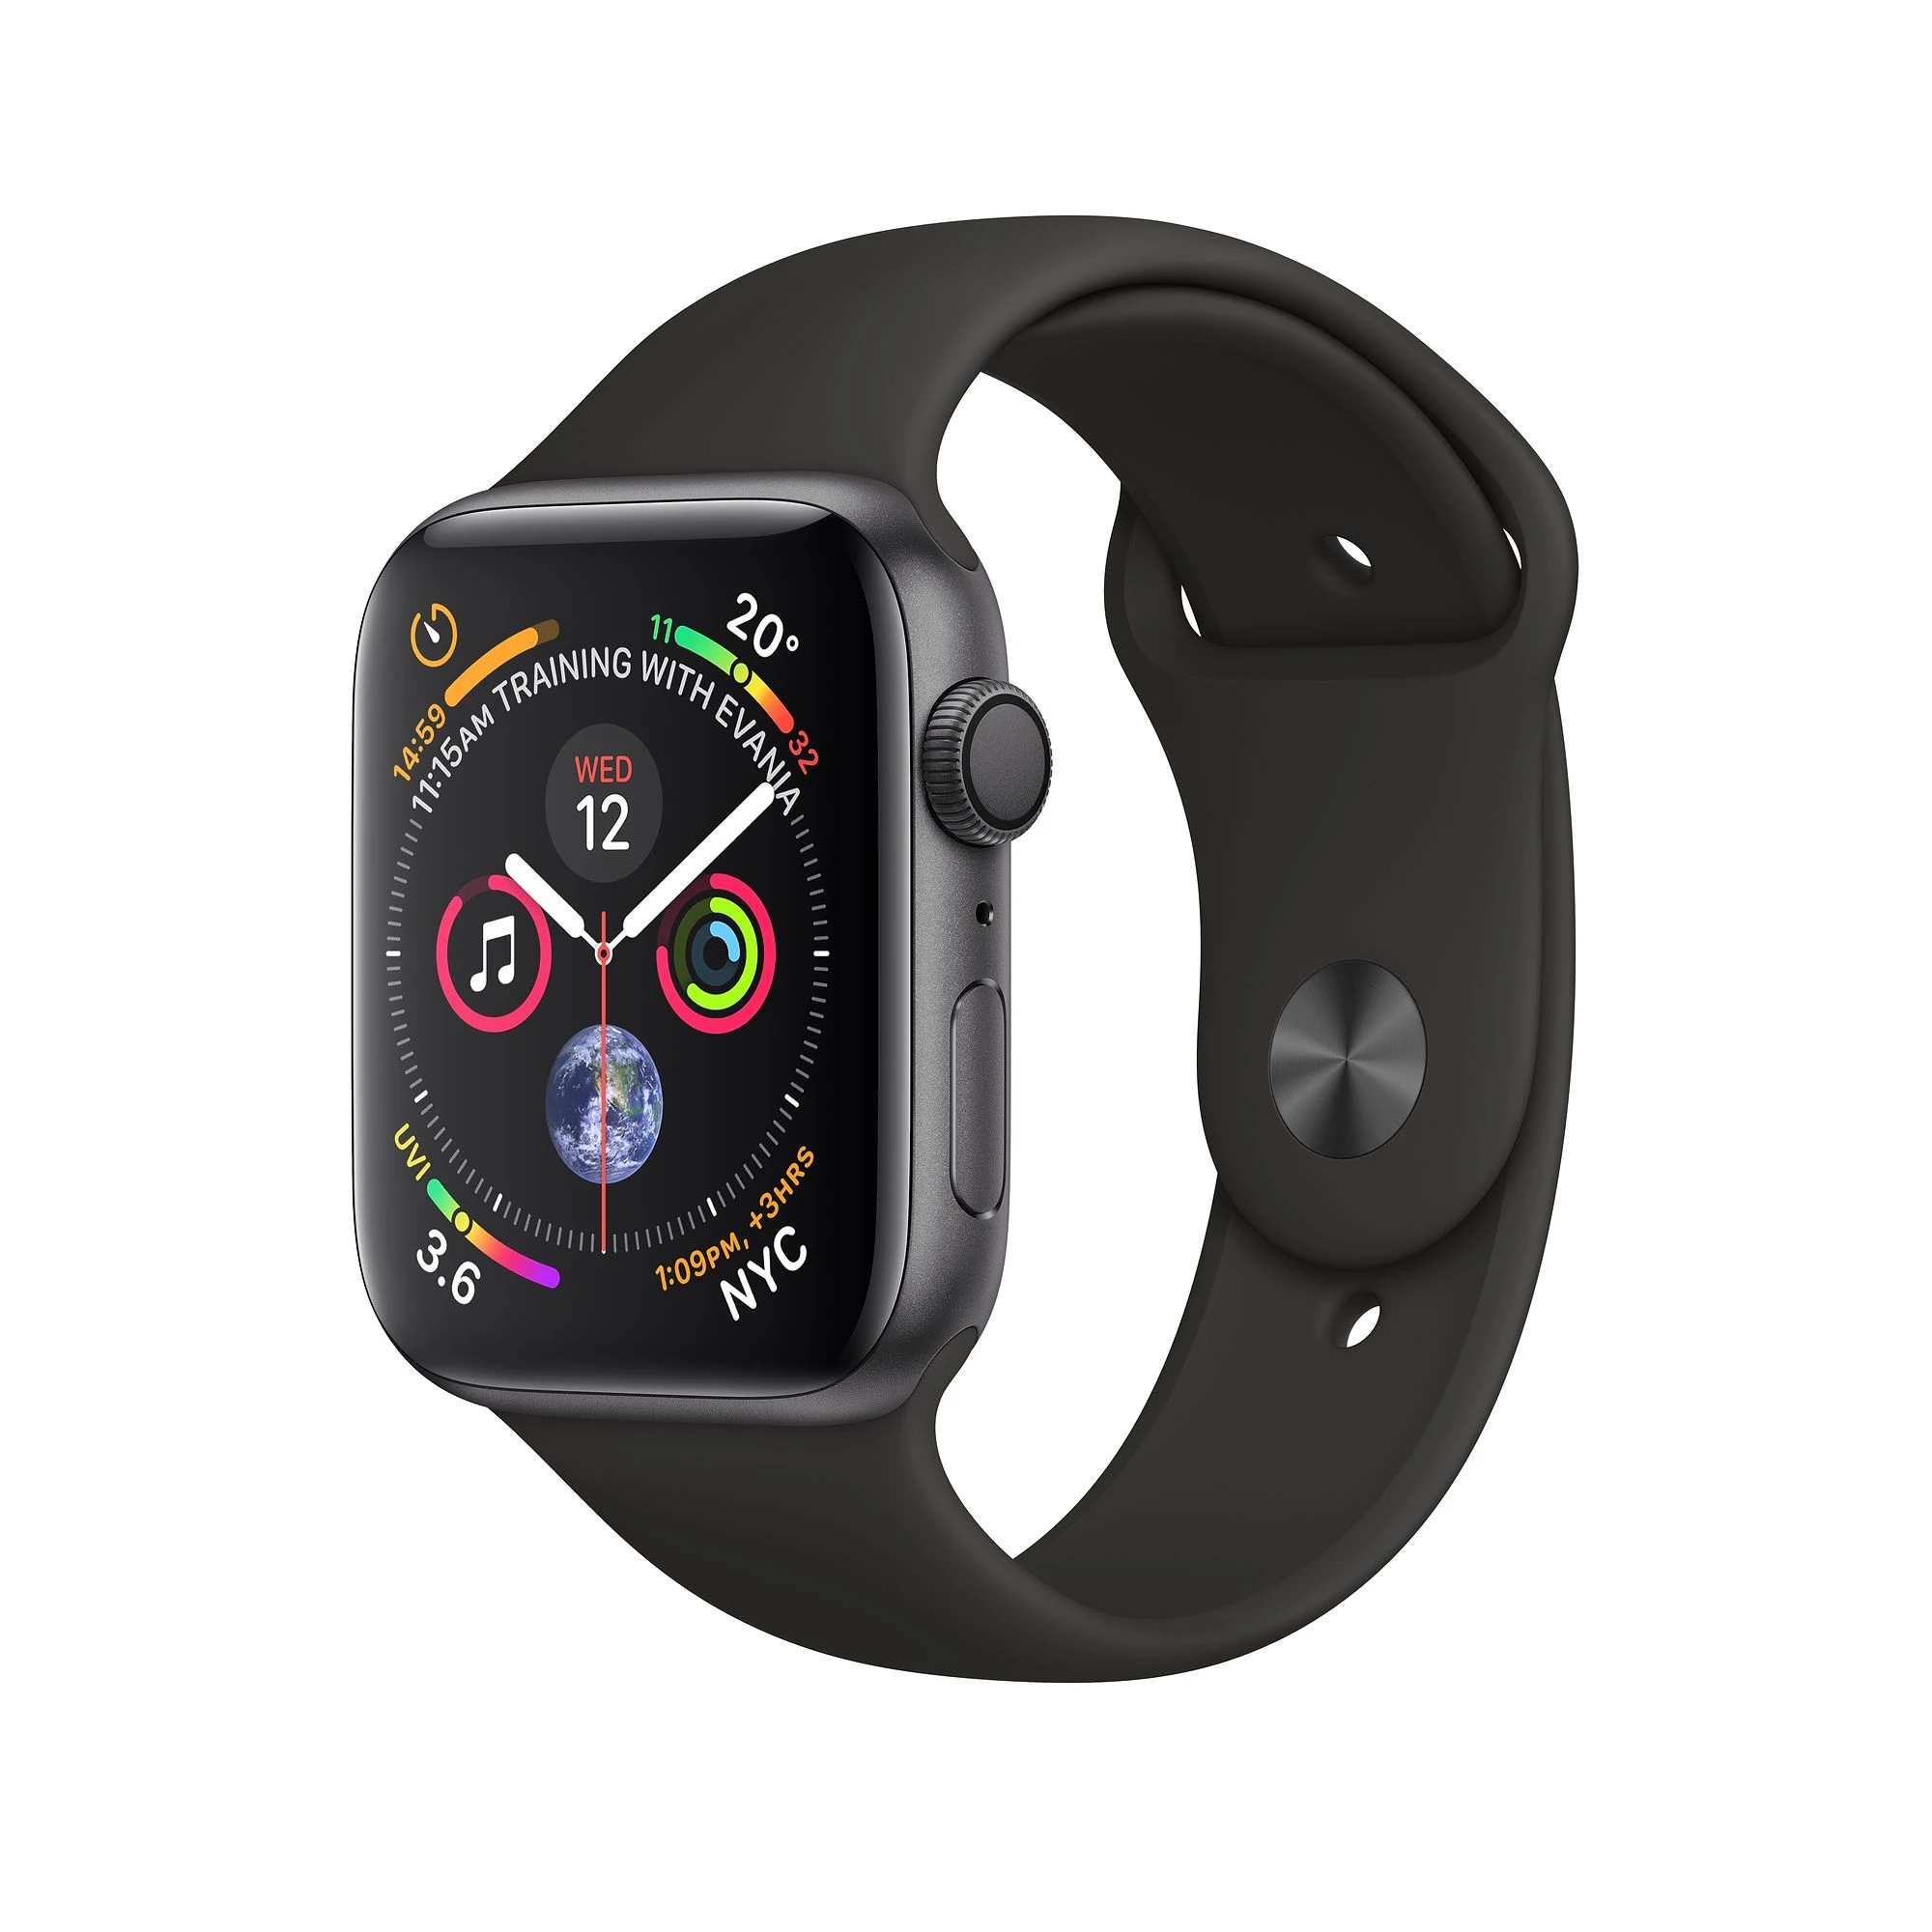 Apple Watch Series 4 (GPS) 40mm Space Gray Aluminium Case with Black Sport Band (MU662)